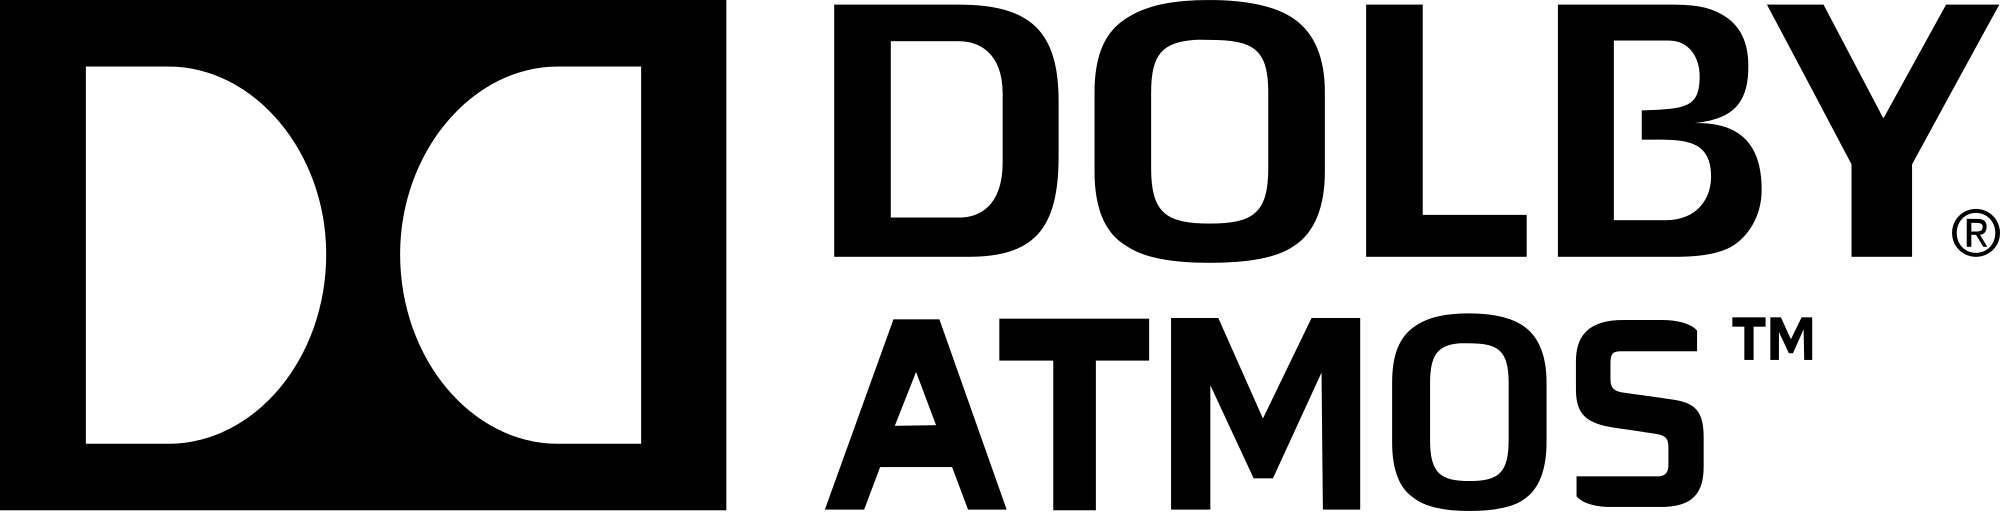 Logo Dolby Atmos.svg 1